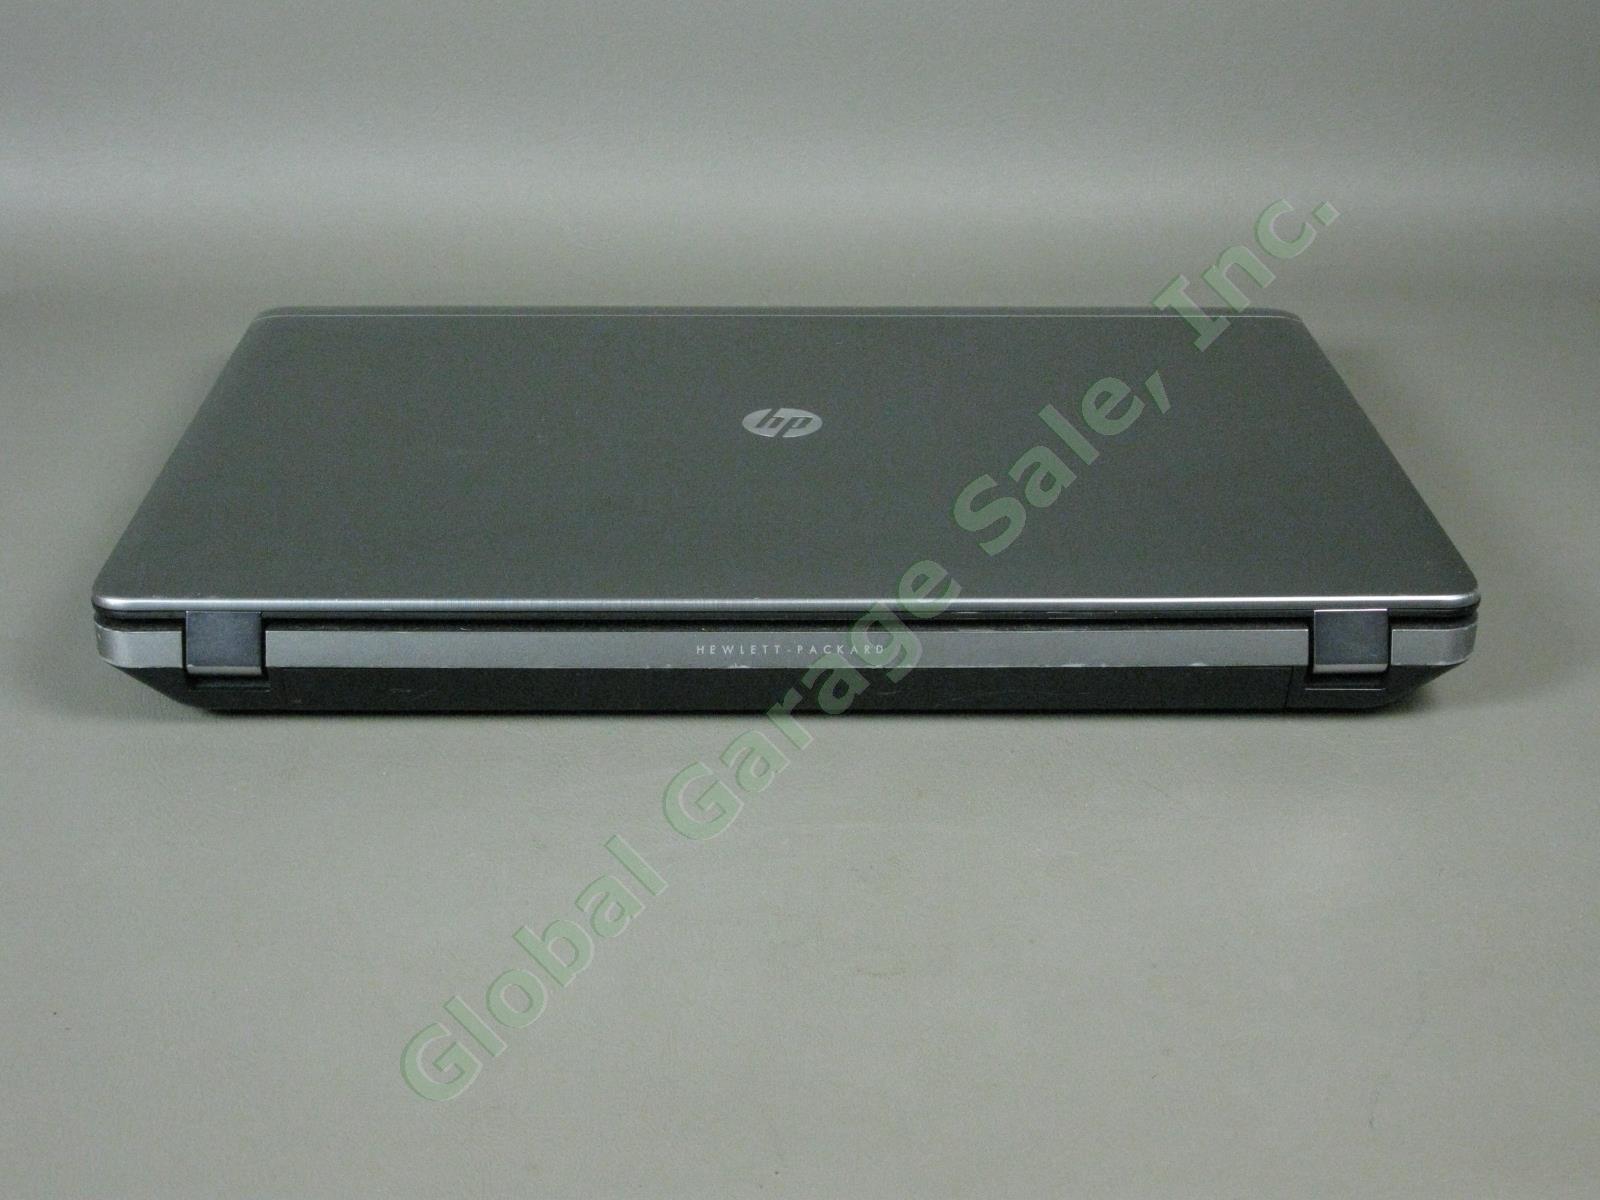 HP ProBook 4540s Laptop Intel i5 2.50GHz 460GB 4GB RAM Windows 10 Pro Refurb NR! 5